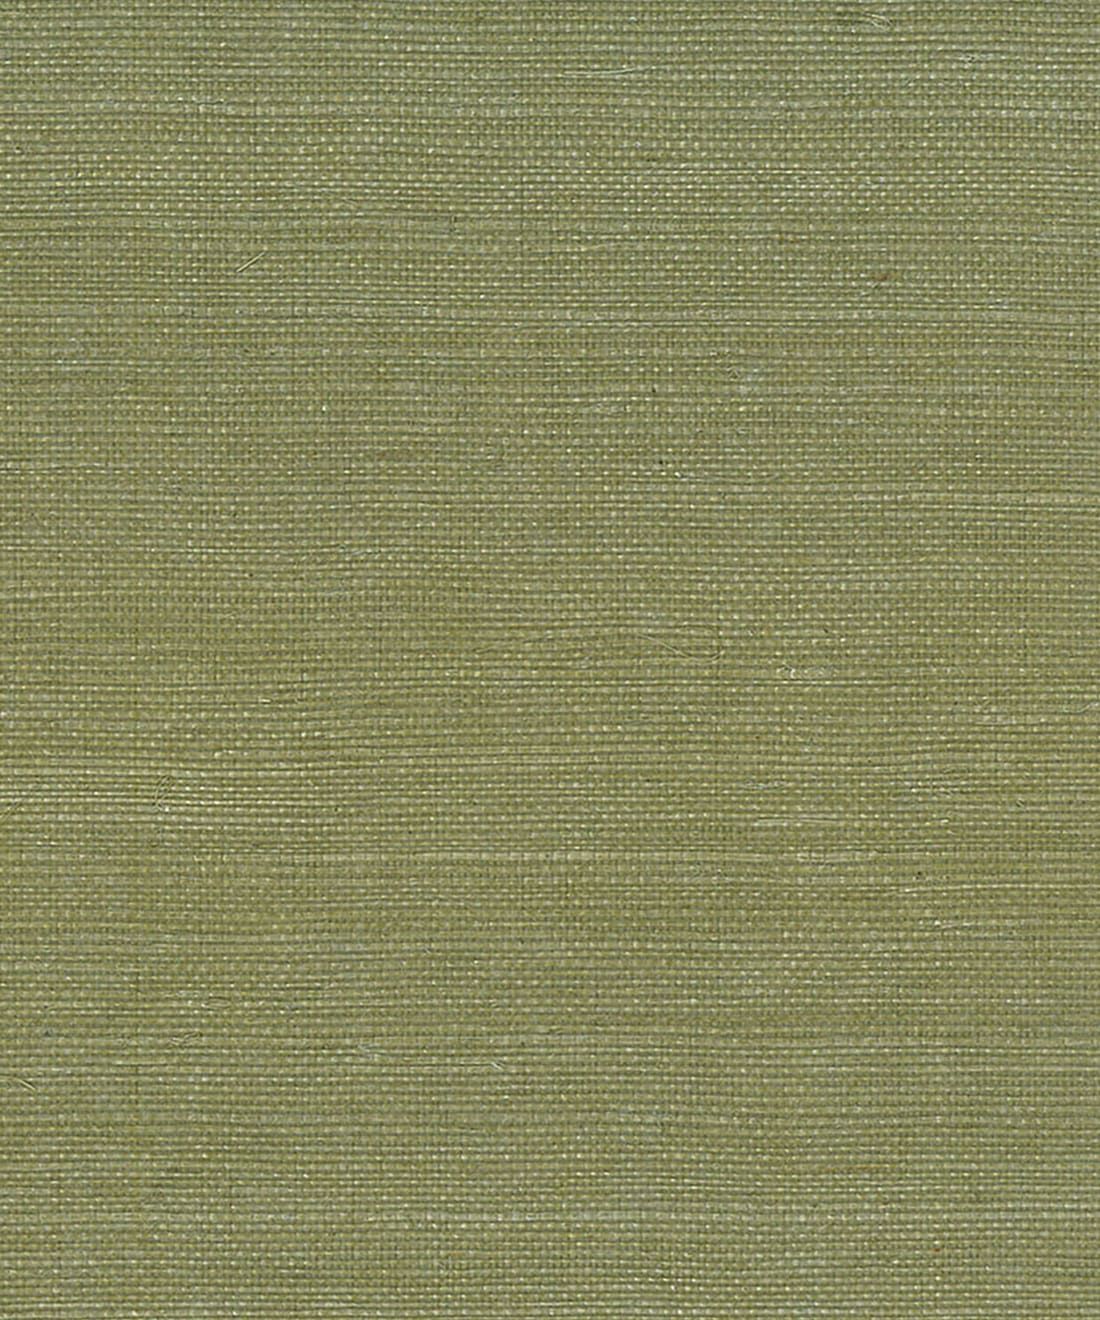 Winter Sisal Grasscloth Wallpaper - Olive